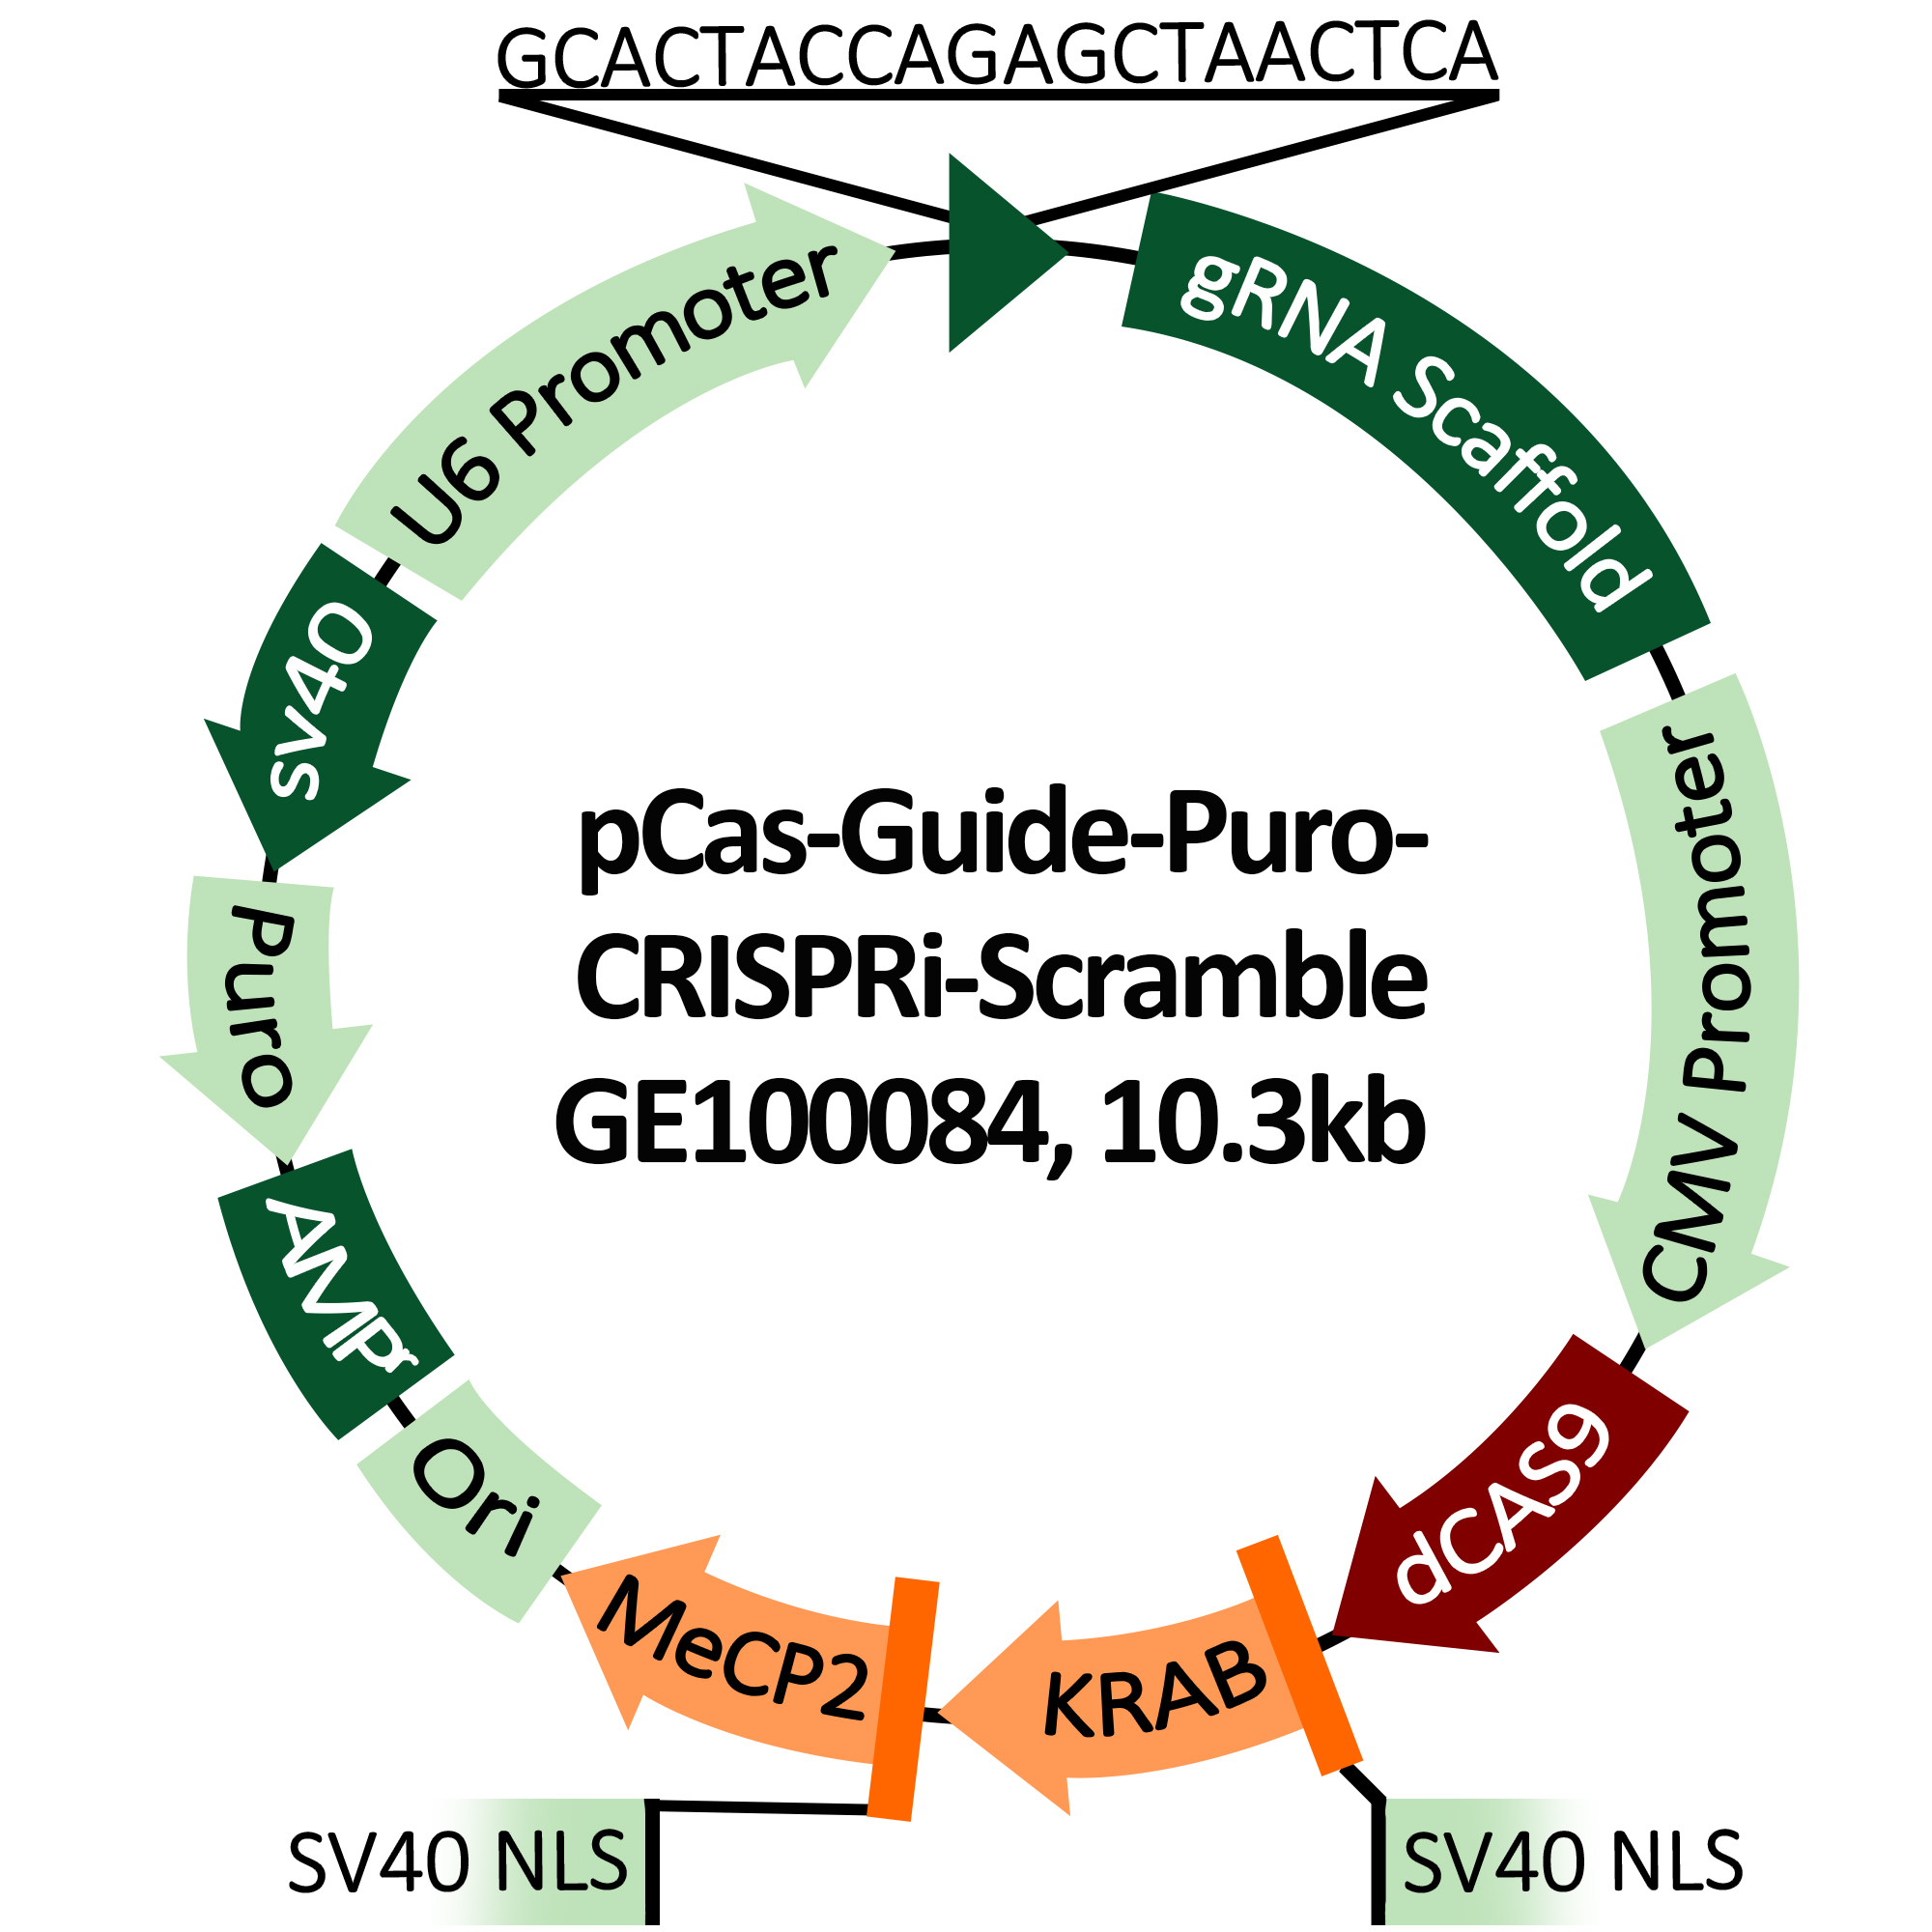 Plasmid map of pCas-Guide-Puro-CRISPRi-Scramble(GE100084)